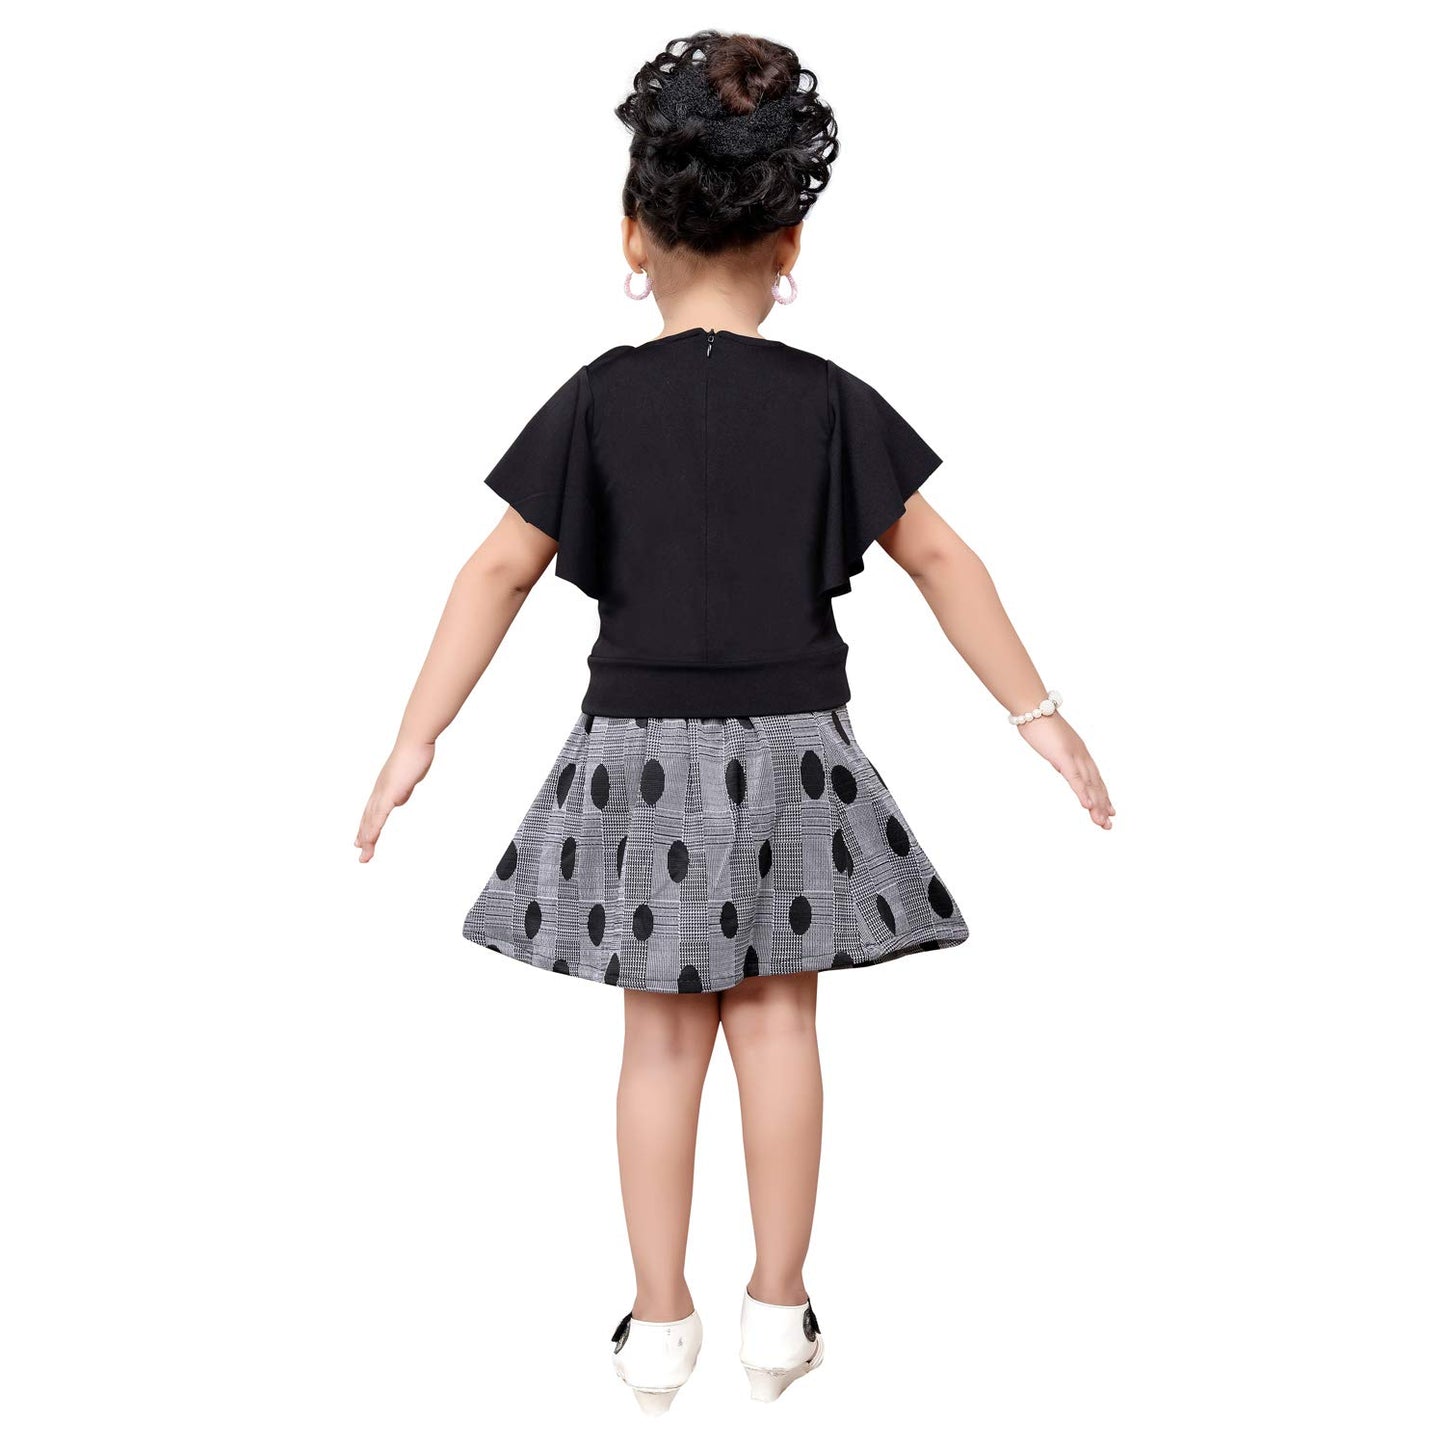 Wish Karo Baby Girls Partywear Frock Dress (stn751blk)